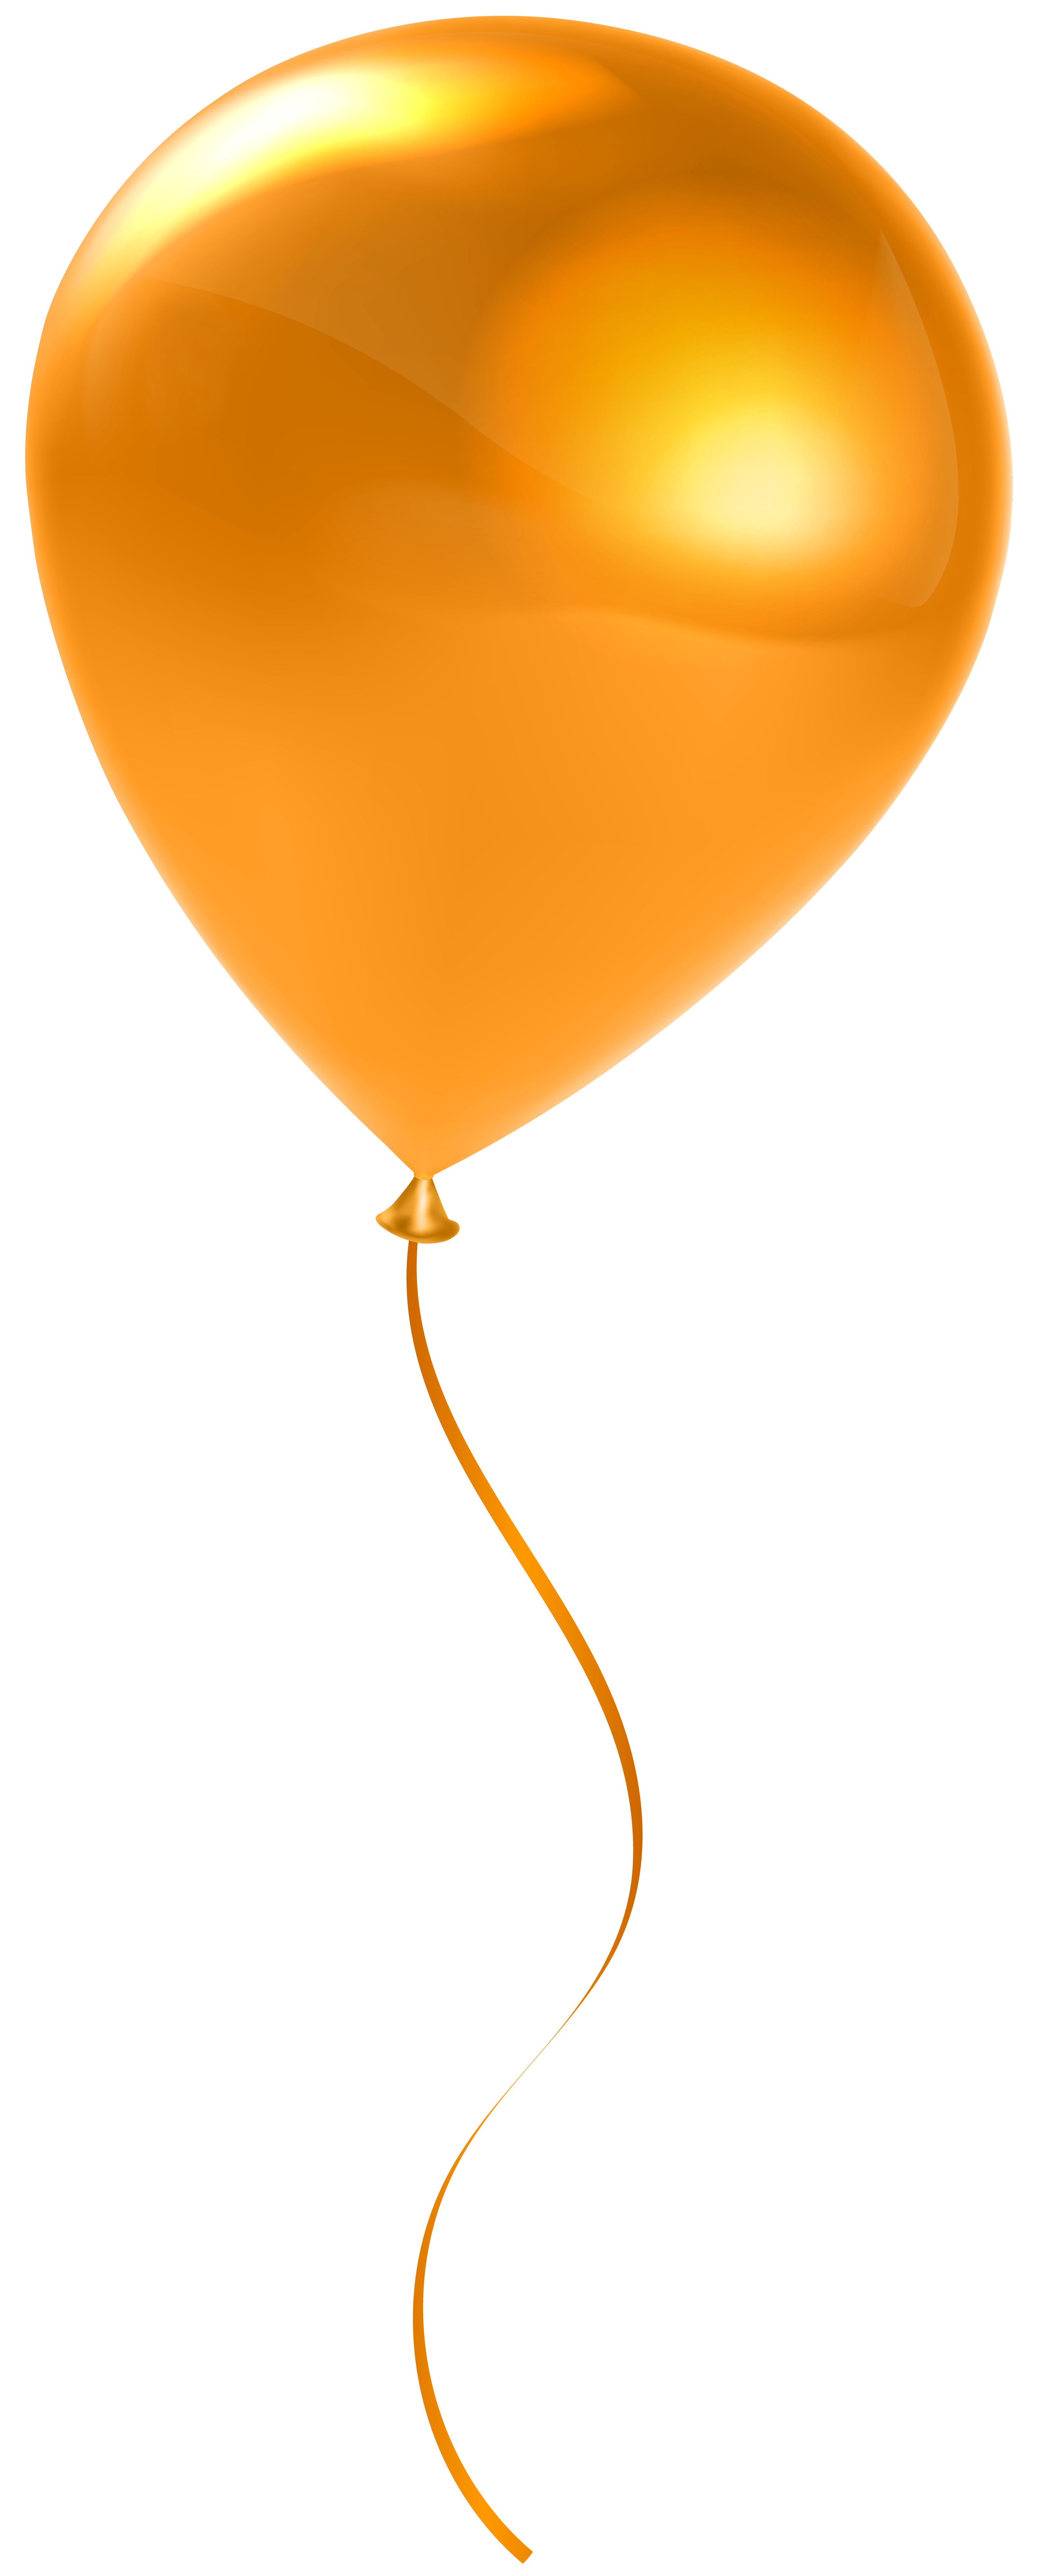 Single Orange Balloon Transparent Clip Art | Gallery Yopriceville ...